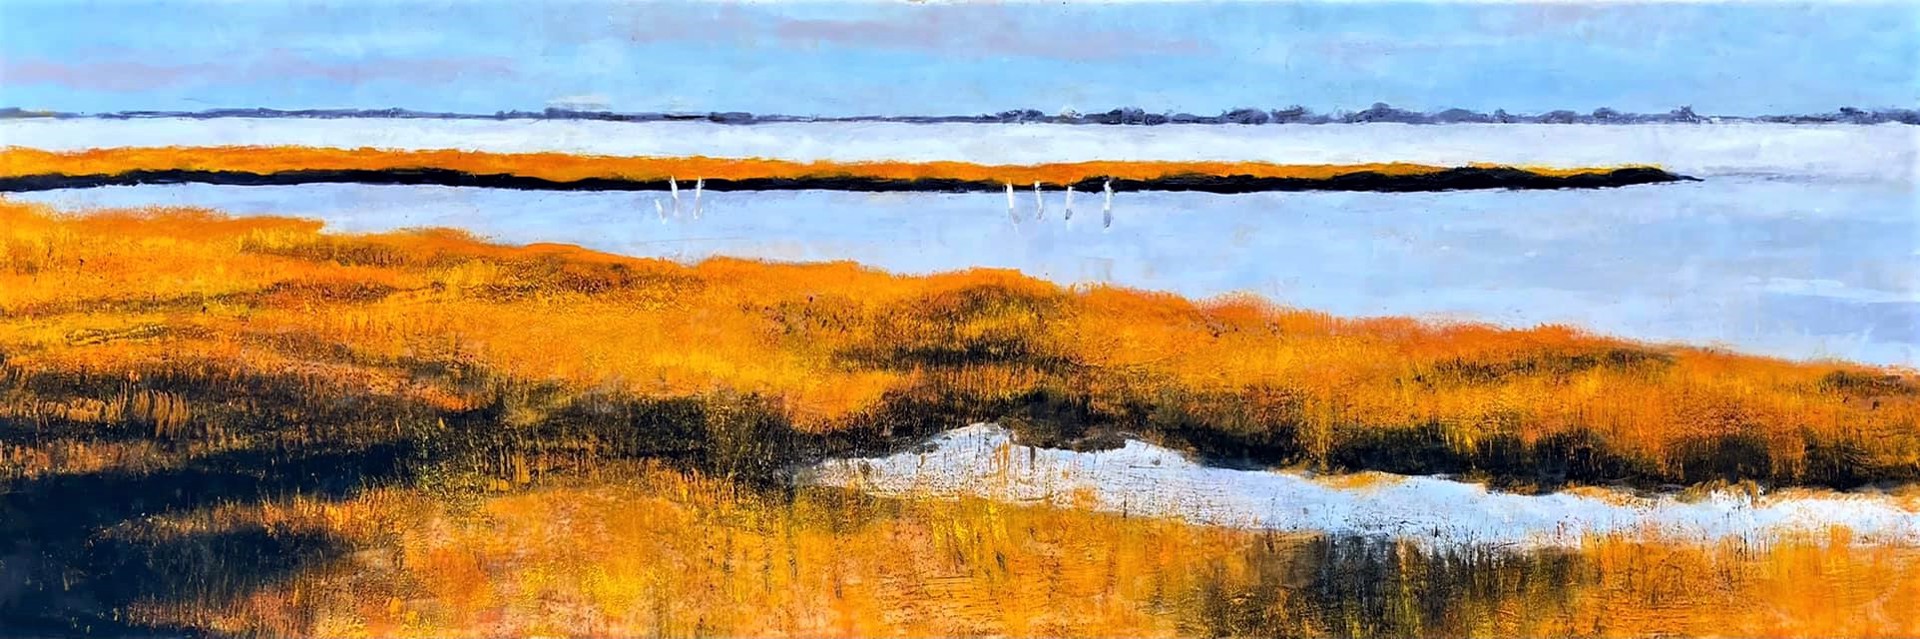 Sea to Shining Sea: Carolina Salt Marsh by Bob Fesser